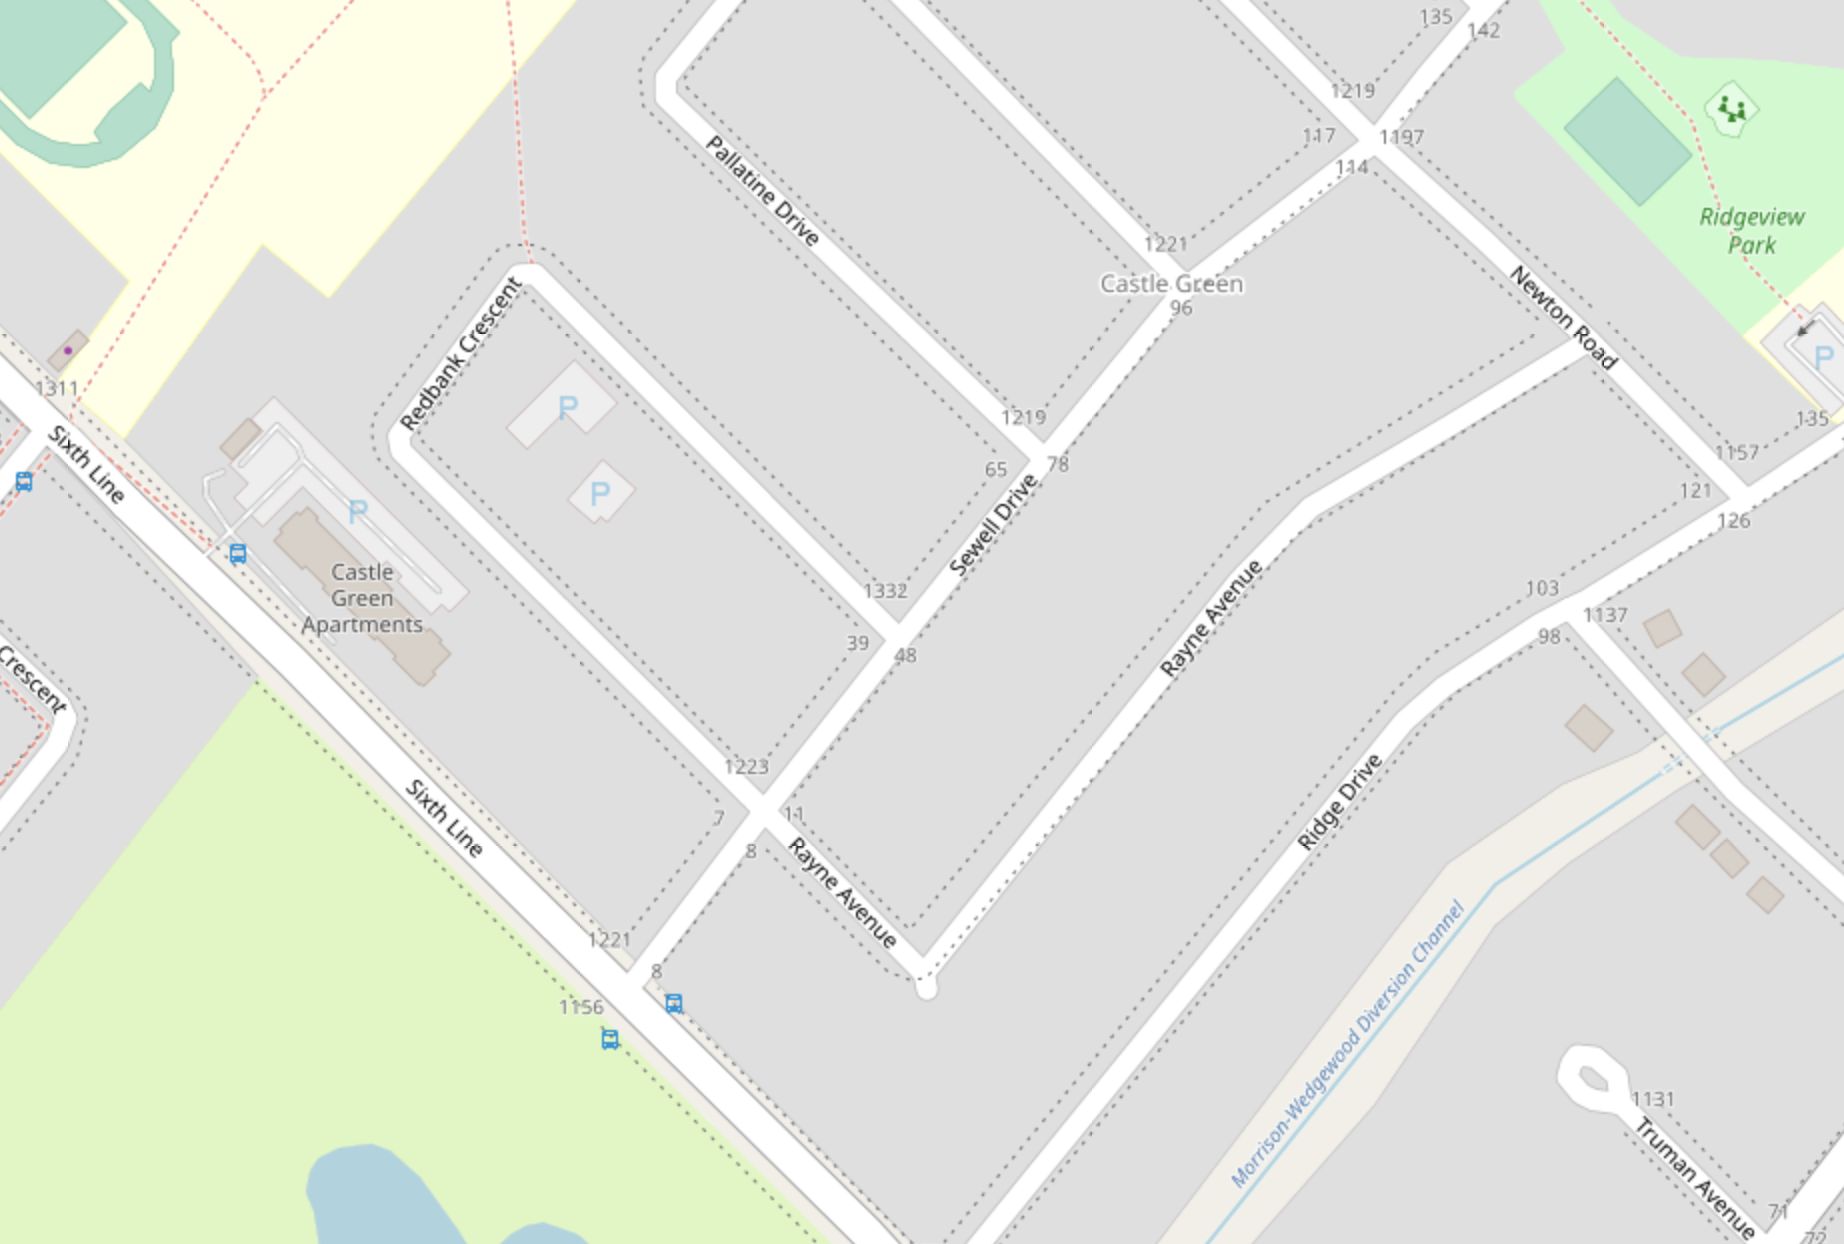 Rayne Ave | Openstreetmap